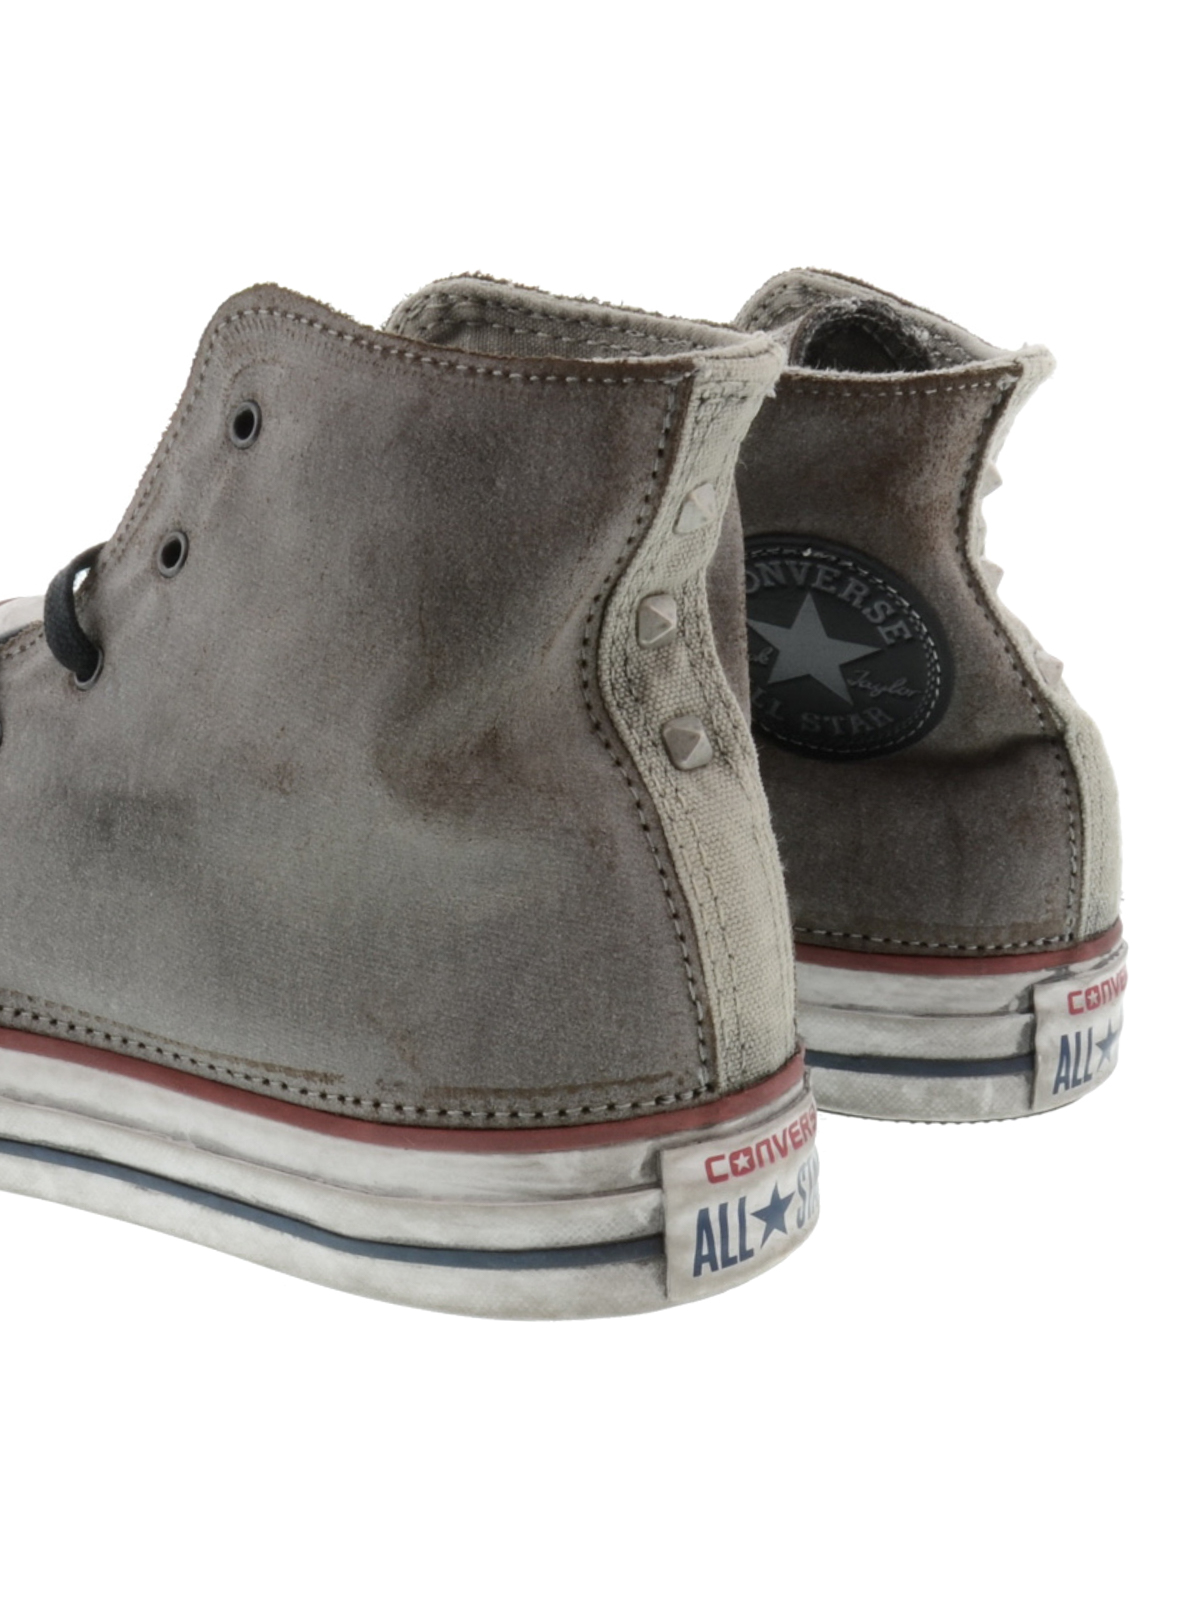 Favor Matemático herida Zapatillas Converse Limited Edition - Premium iron star sneakers -  1C15FA06IRON